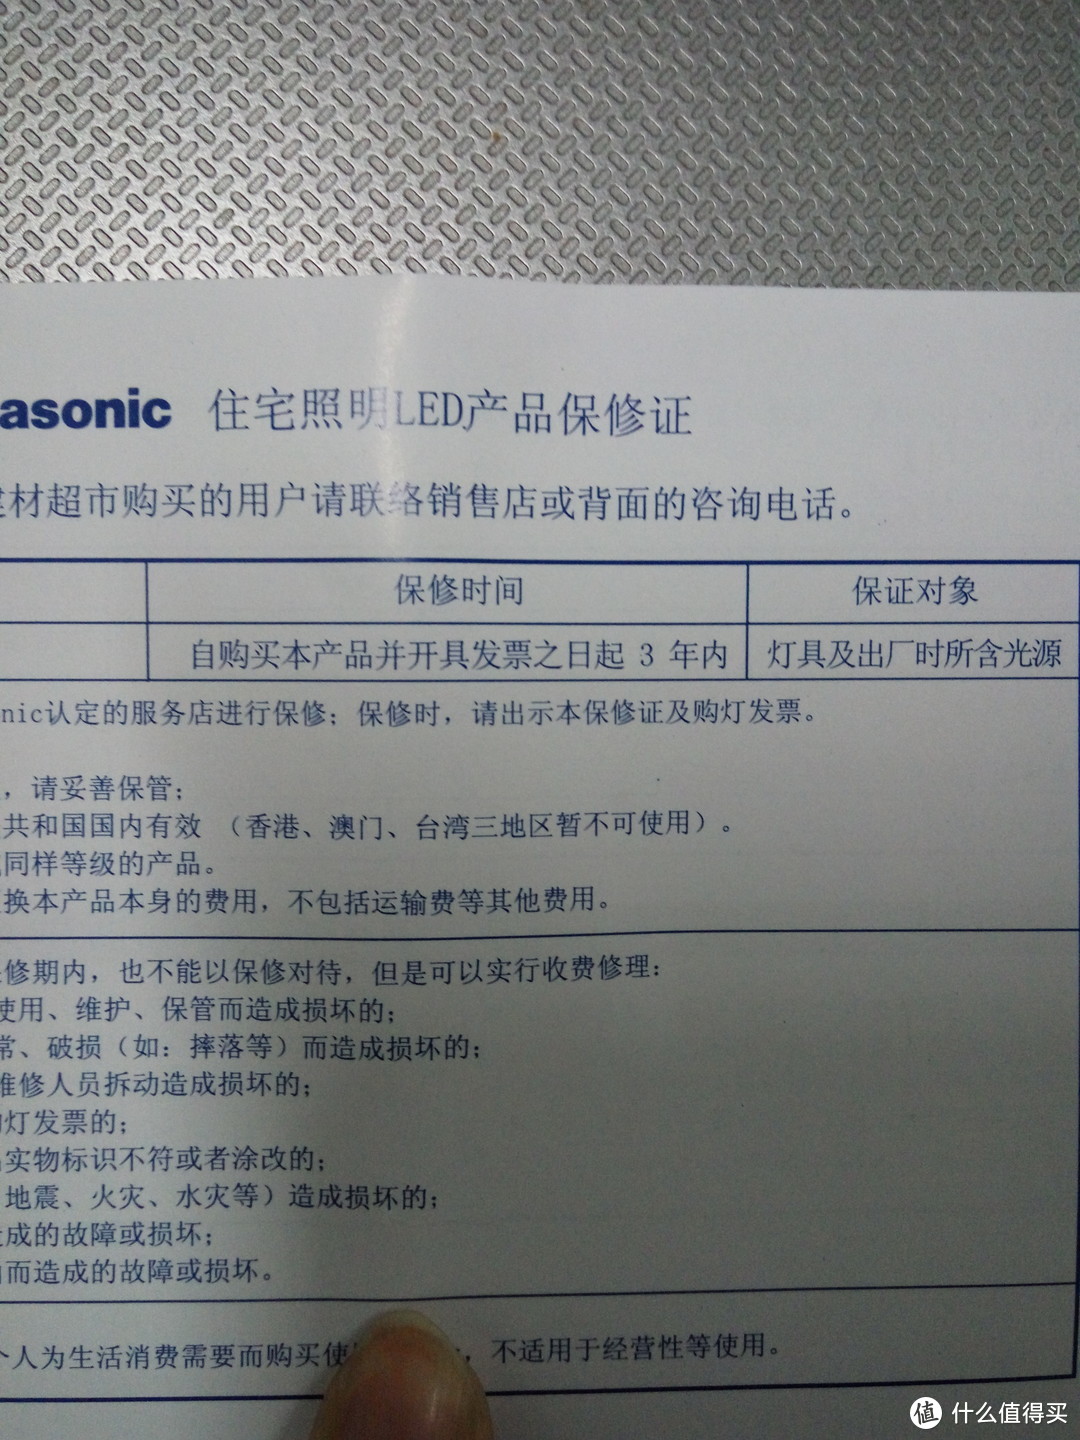 Panasonic 松下 HH-LT0612 六段无极调光台灯开箱体验